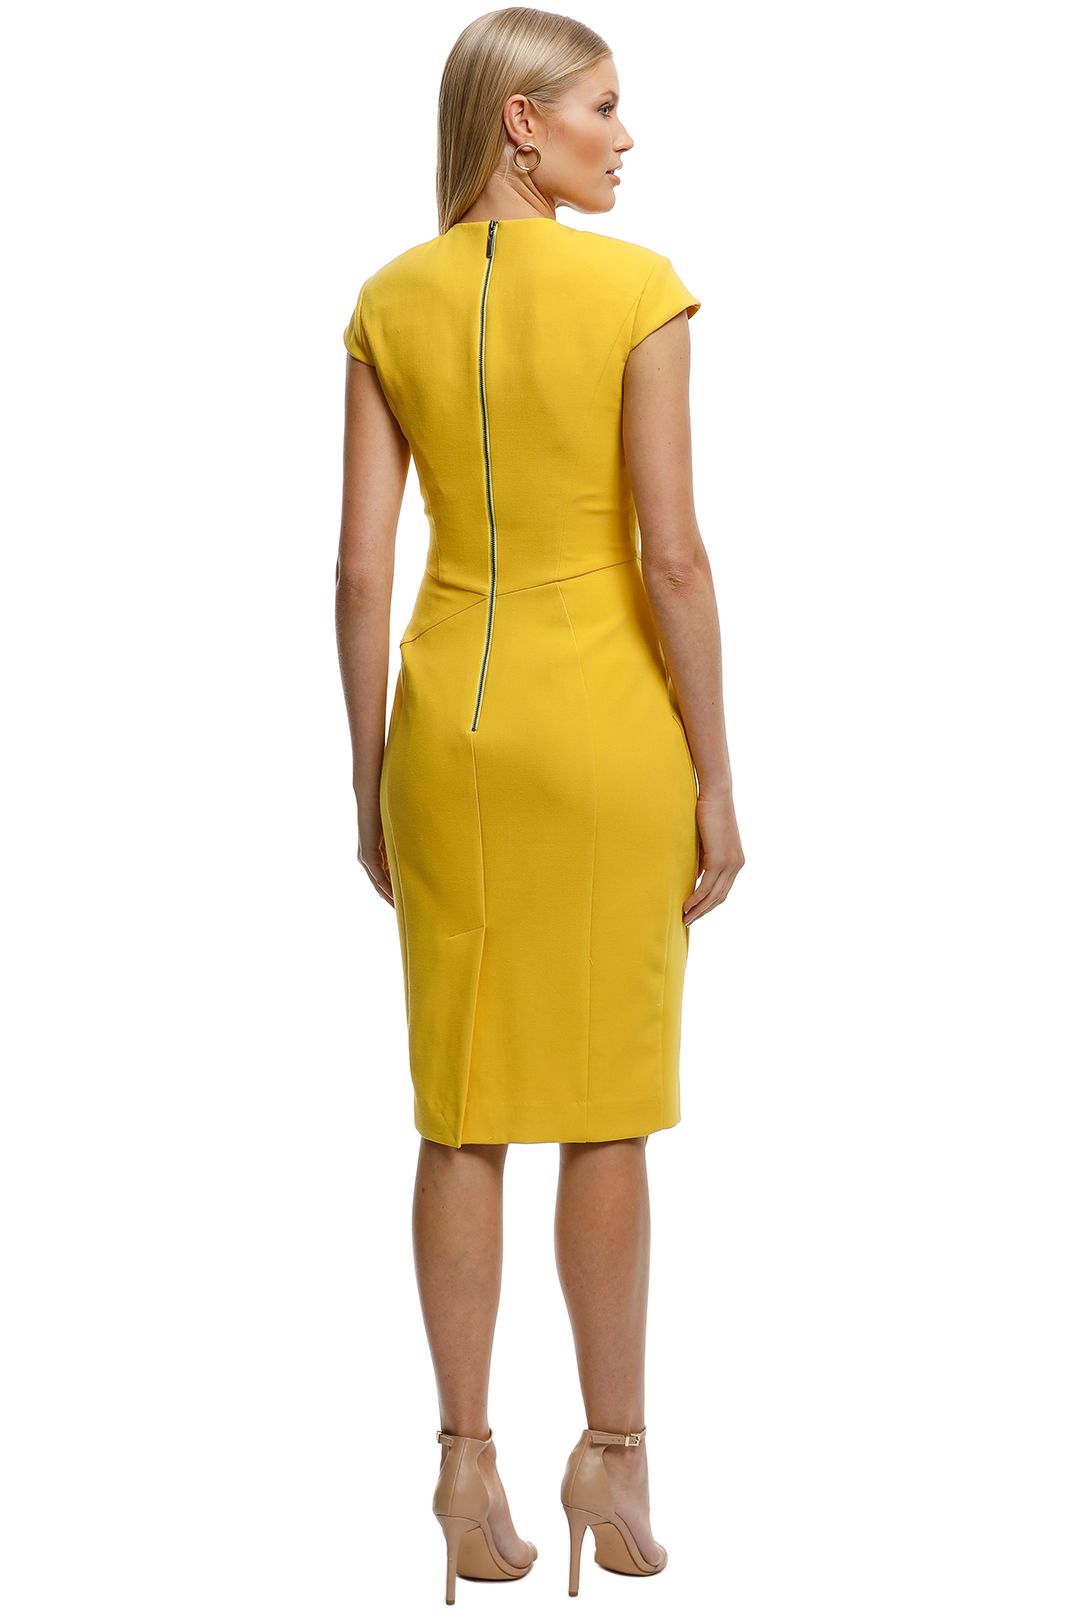 CUE-Mustard-Asymmetric-Pencil-Dress-Mustard-Back